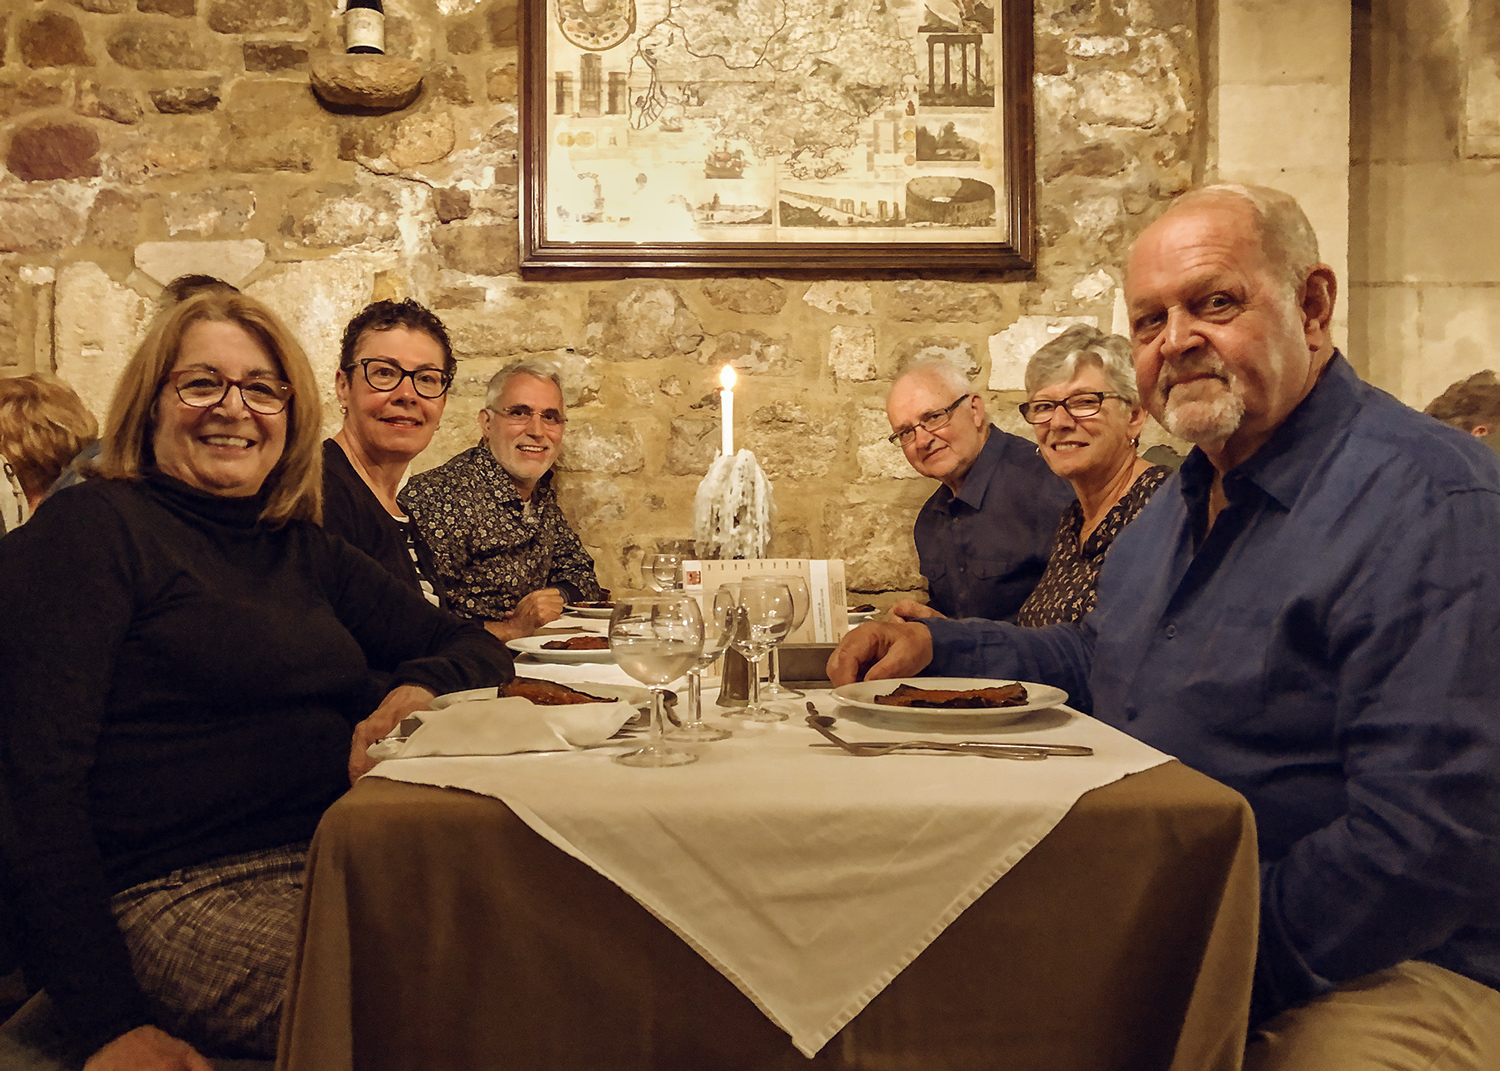 2019 - Joanne, Sharon, John, Gerry, Diane & Ken at Le Moutardier du Pape - Avigno, Provence - Francee